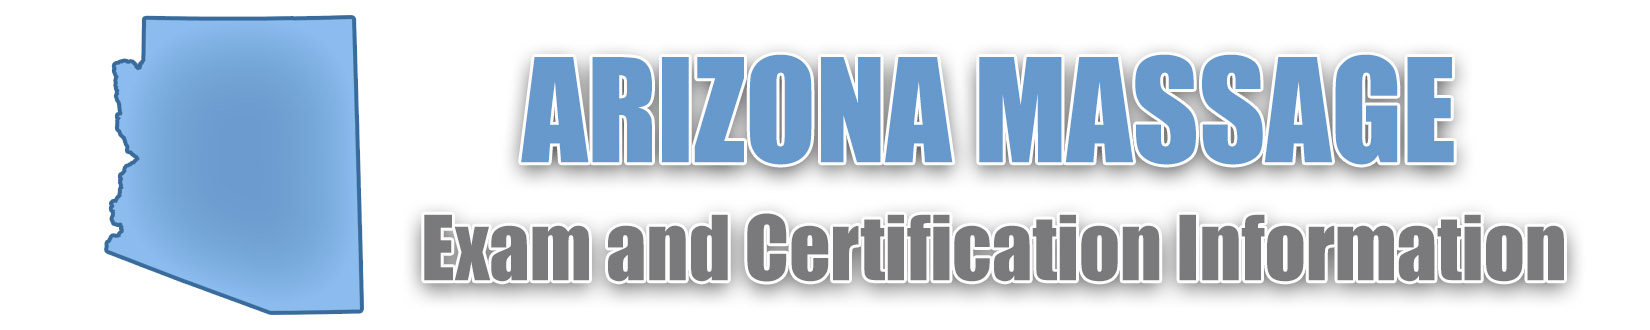 Arizona MBLEX Massage Exam and Certification Information